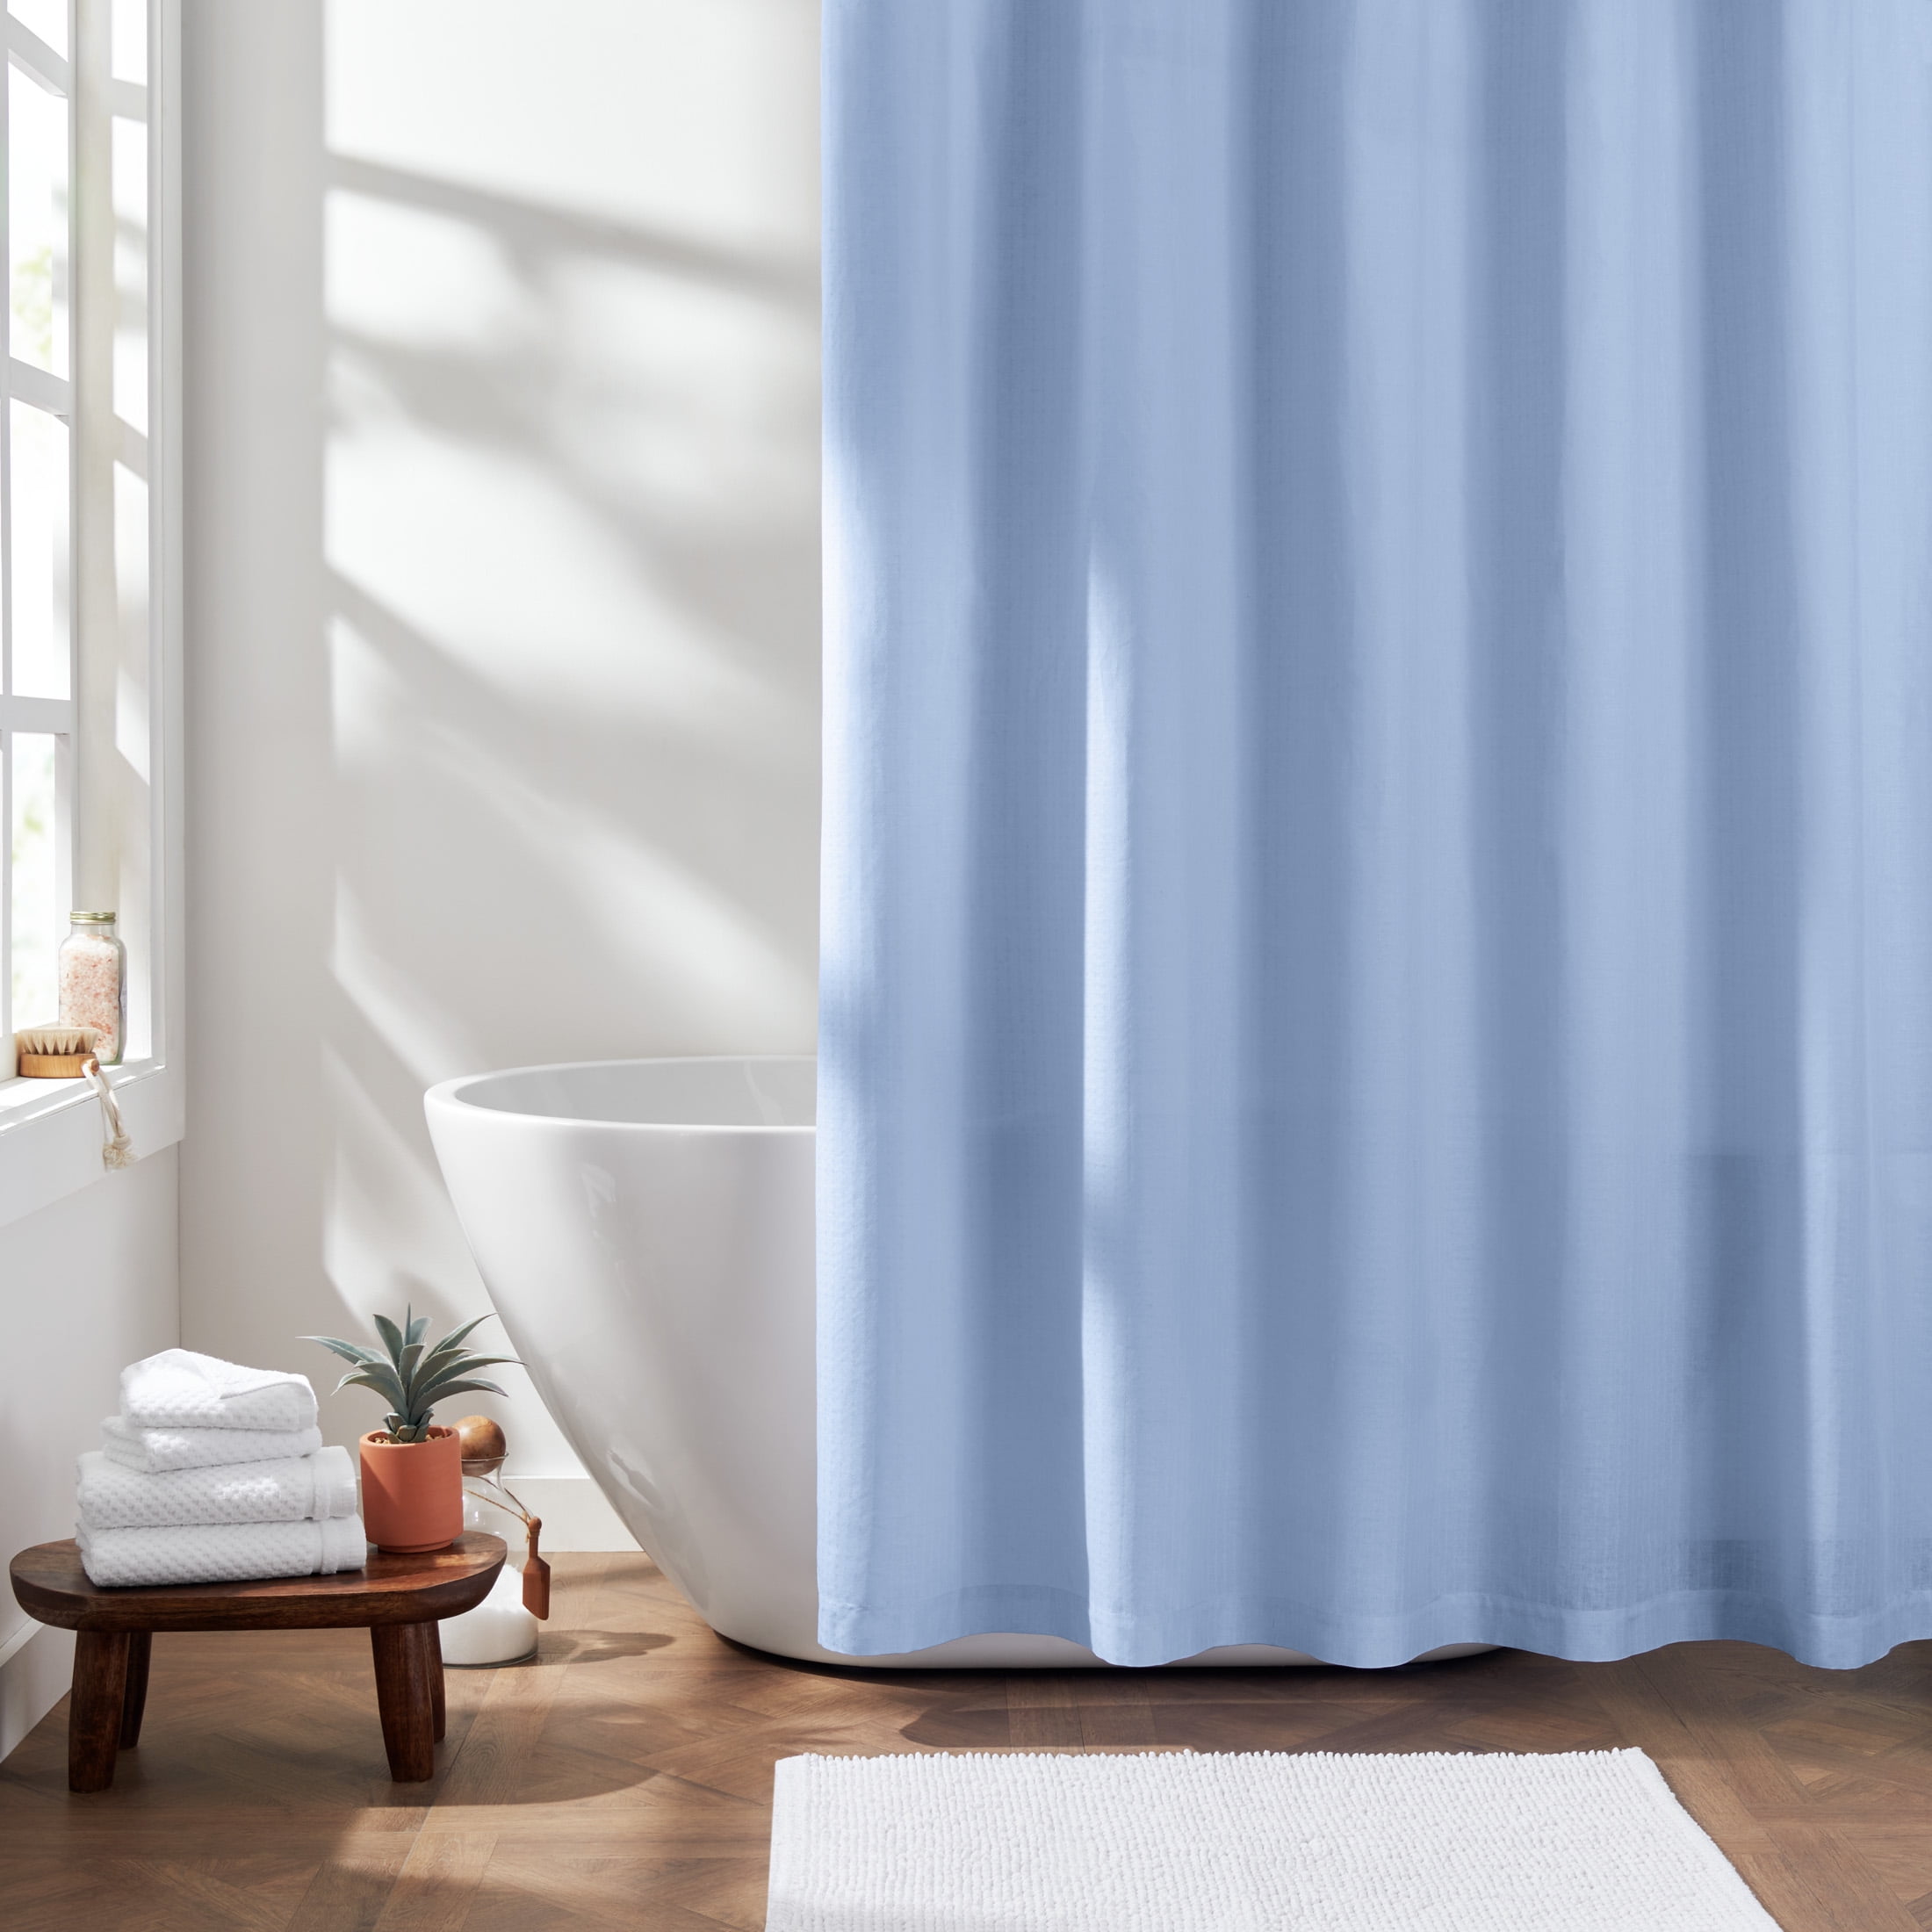 Gap Home Solid Textured Organic Cotton Shower Curtain, Blue, 72x72